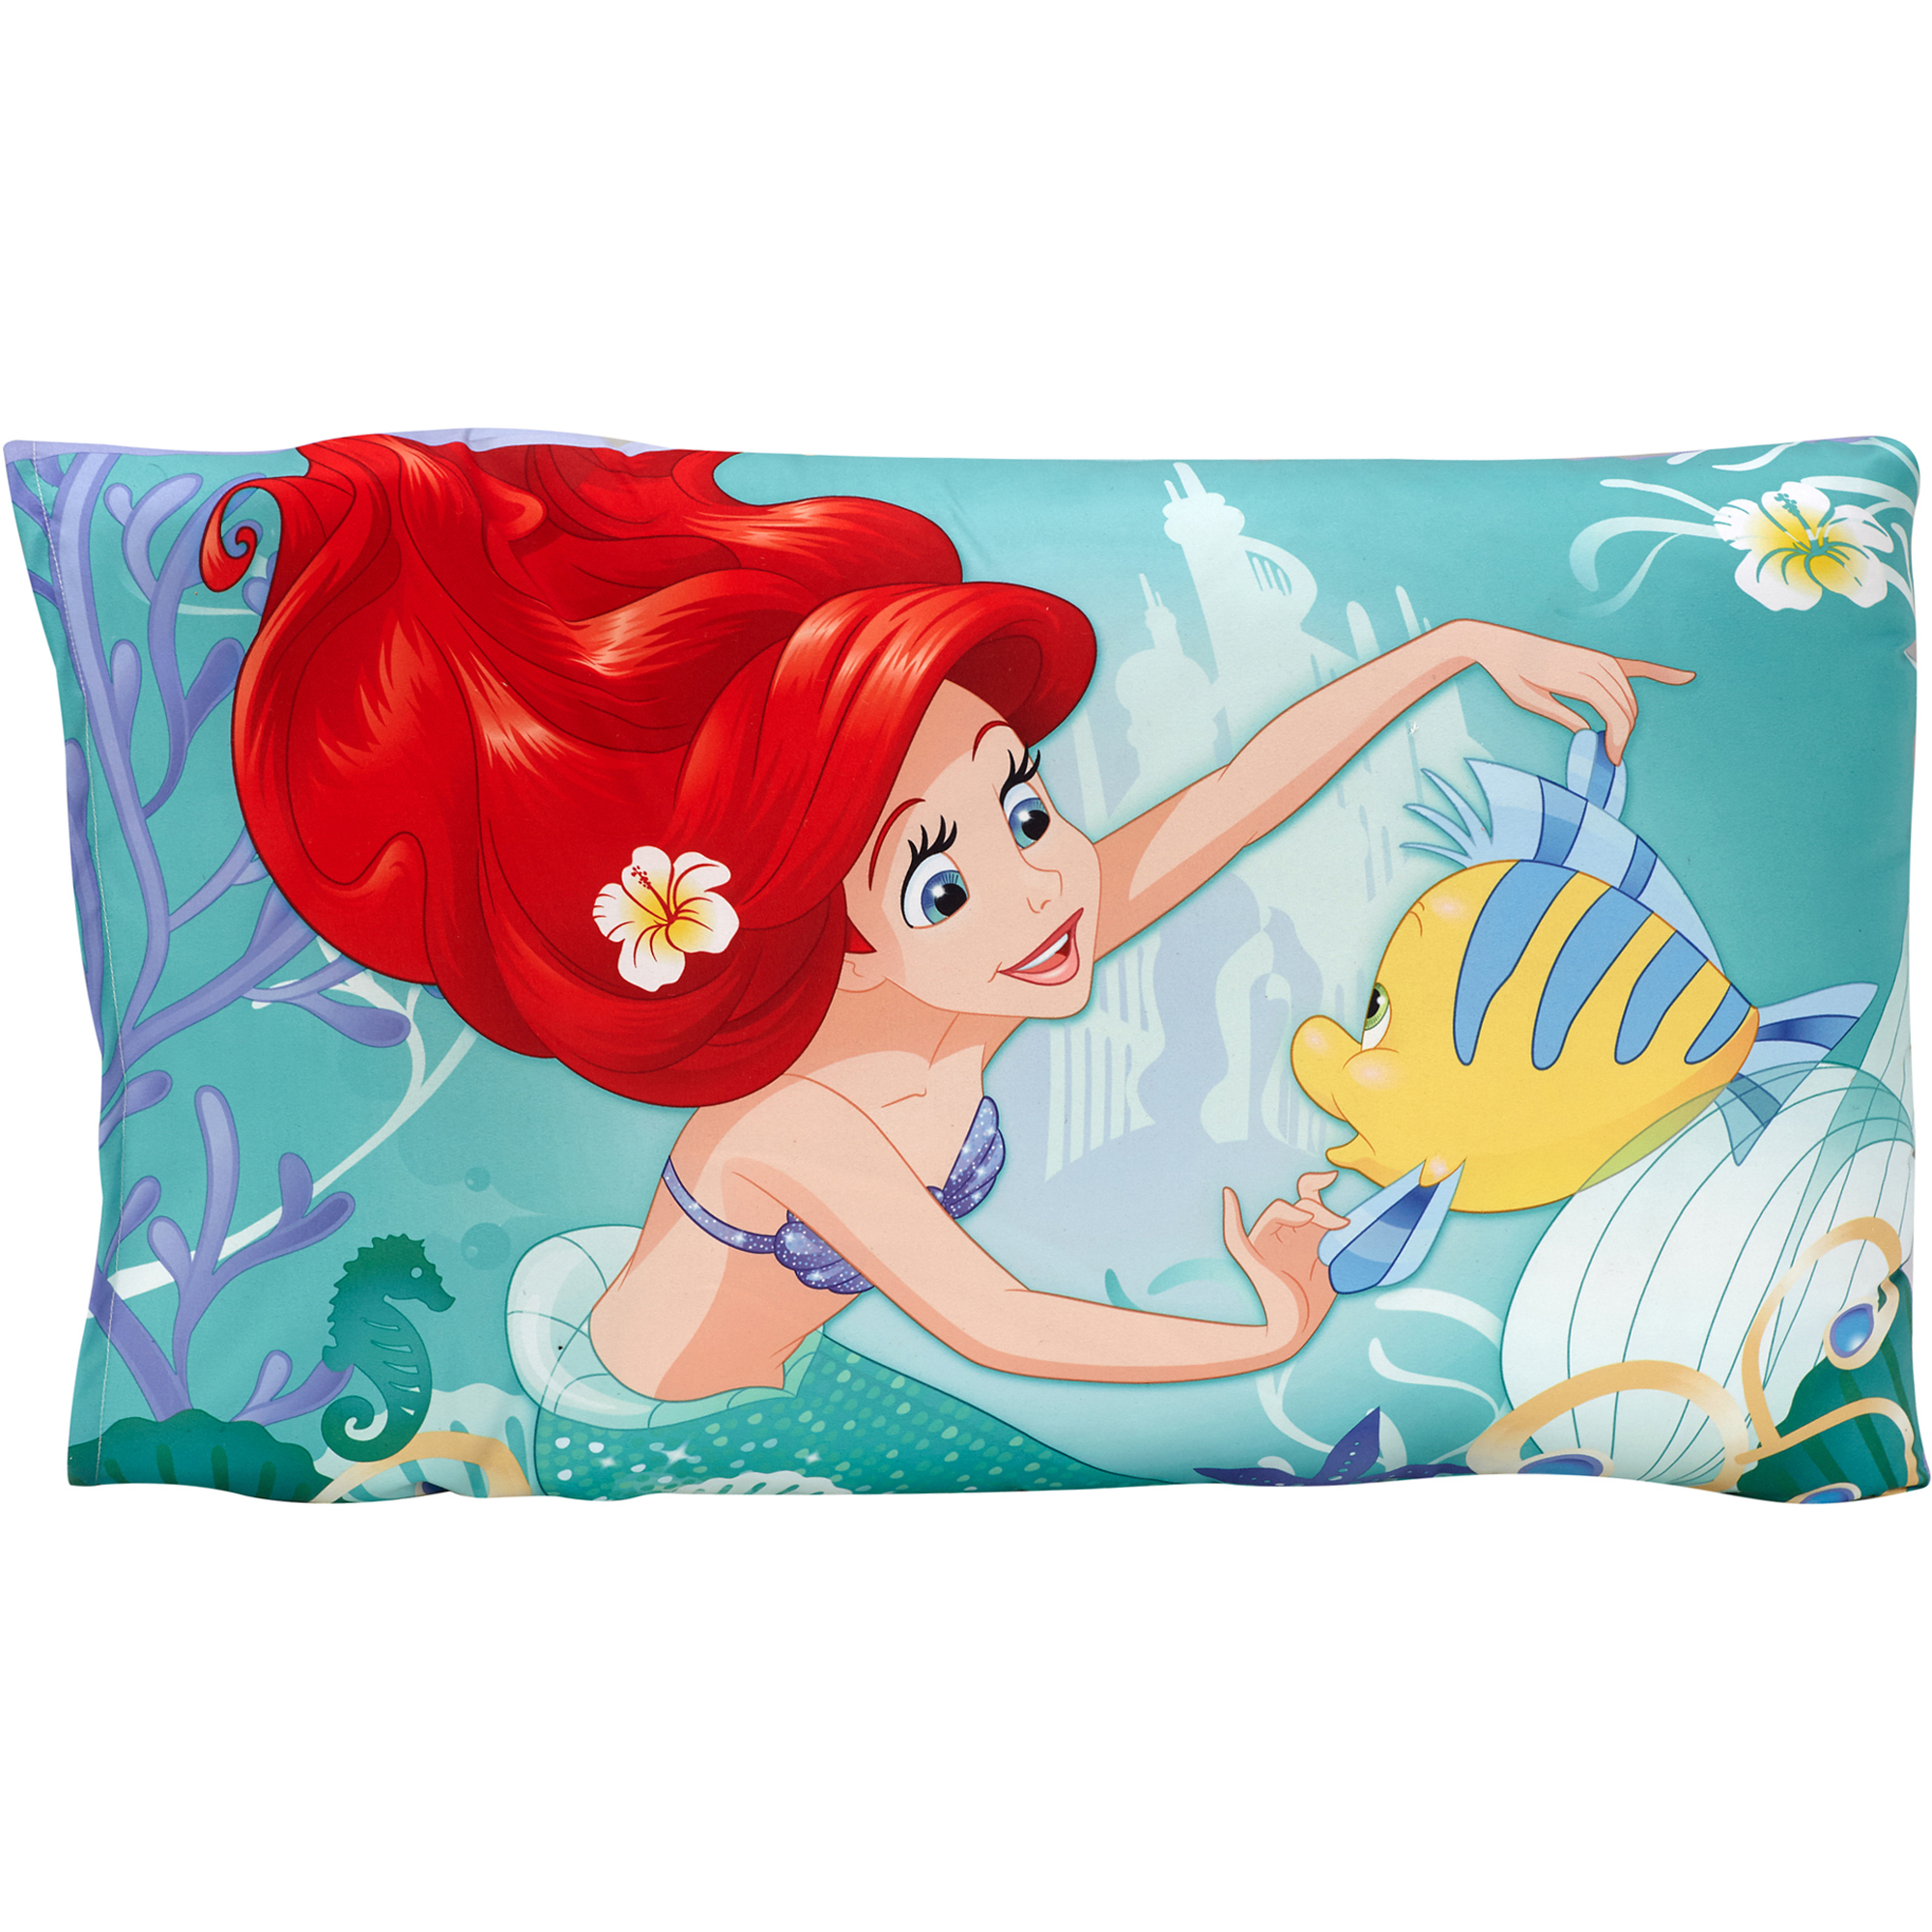 Disney Ariel Key to the Sea 4-Piece Toddler Bedding Set - image 5 of 7